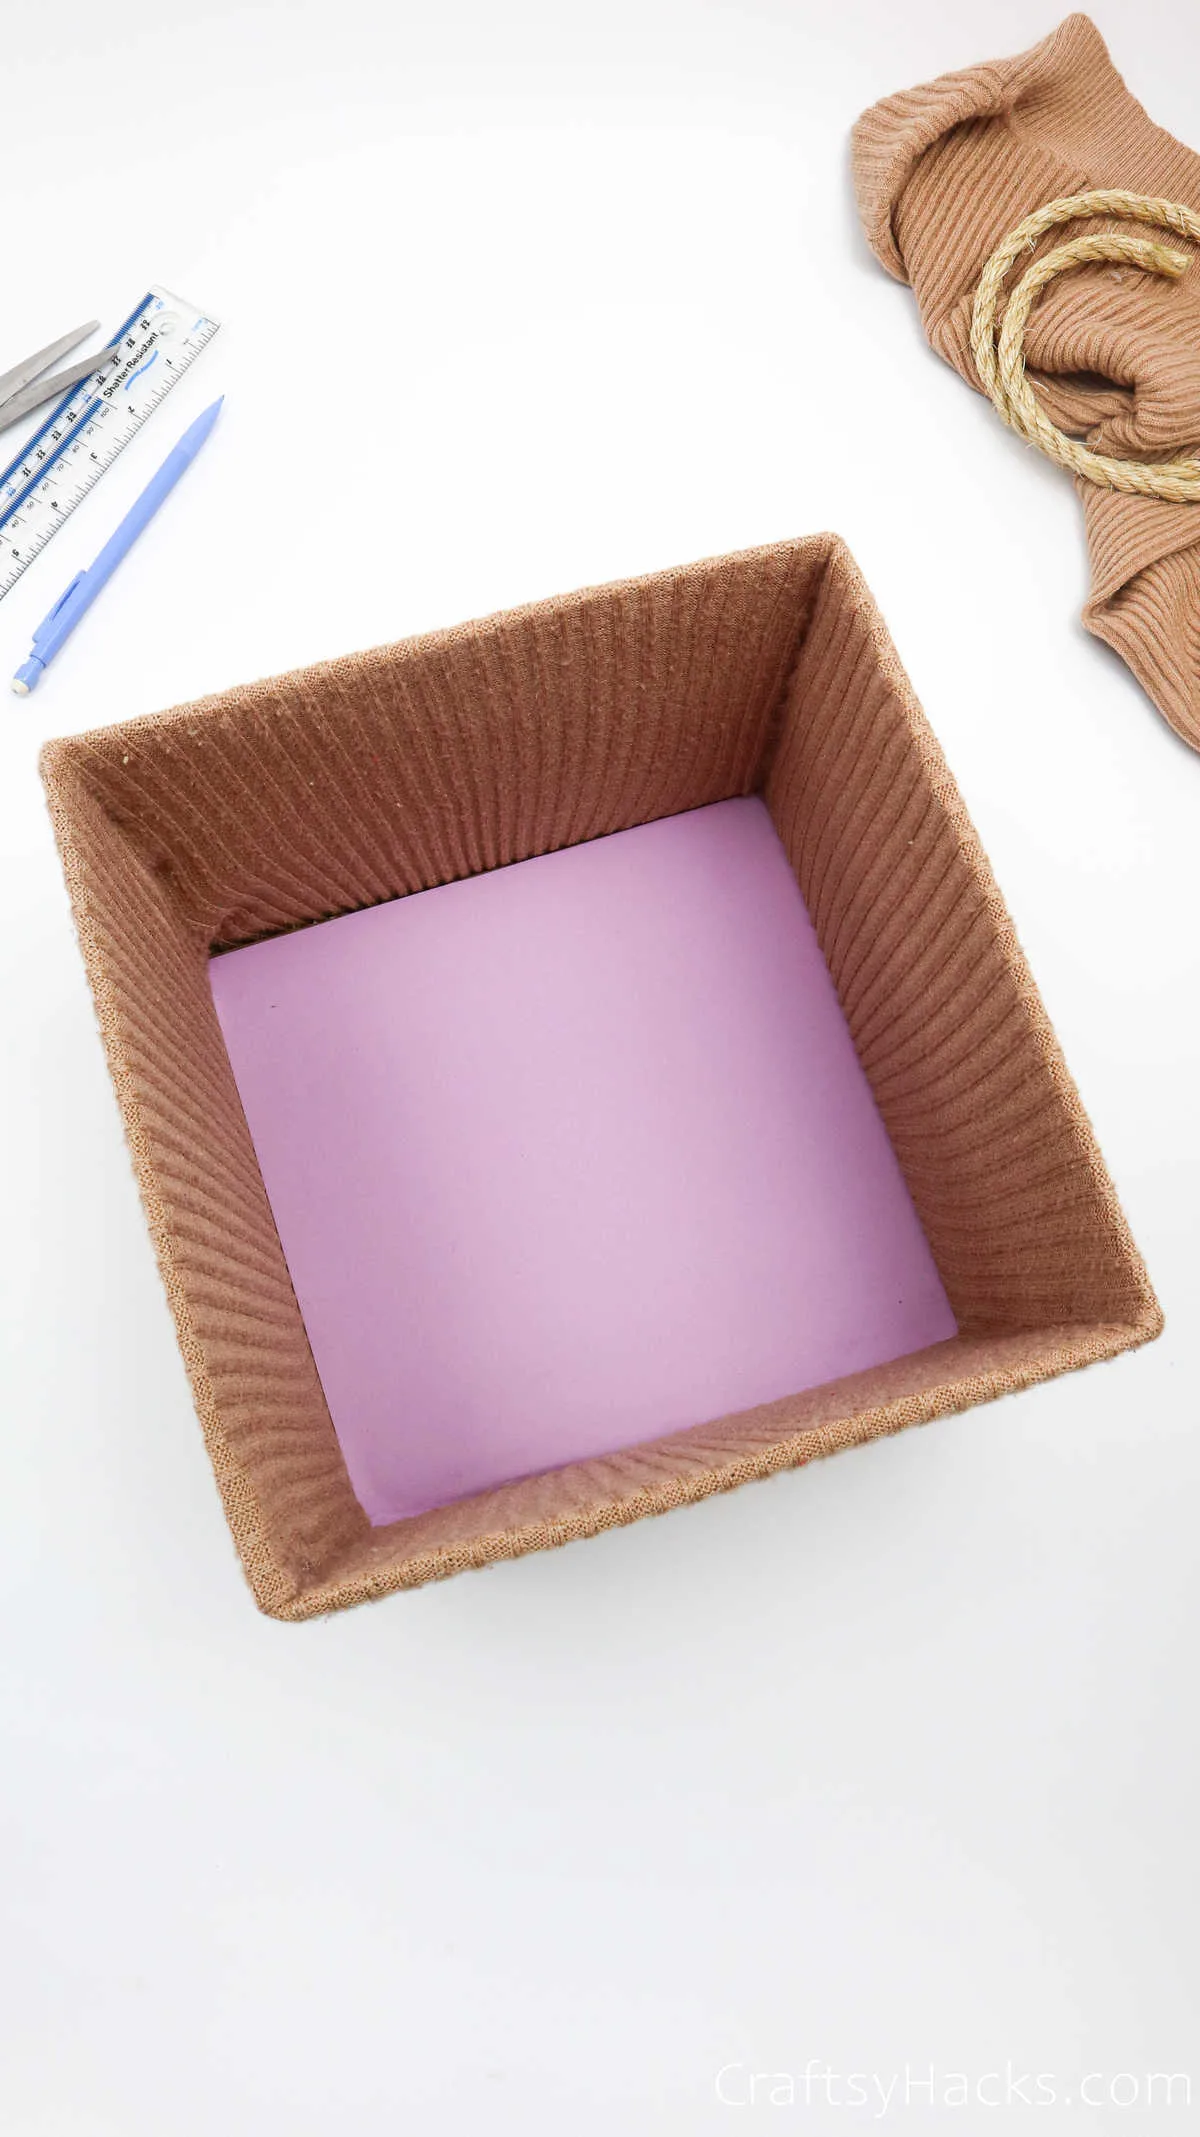 cardboard bottom in box